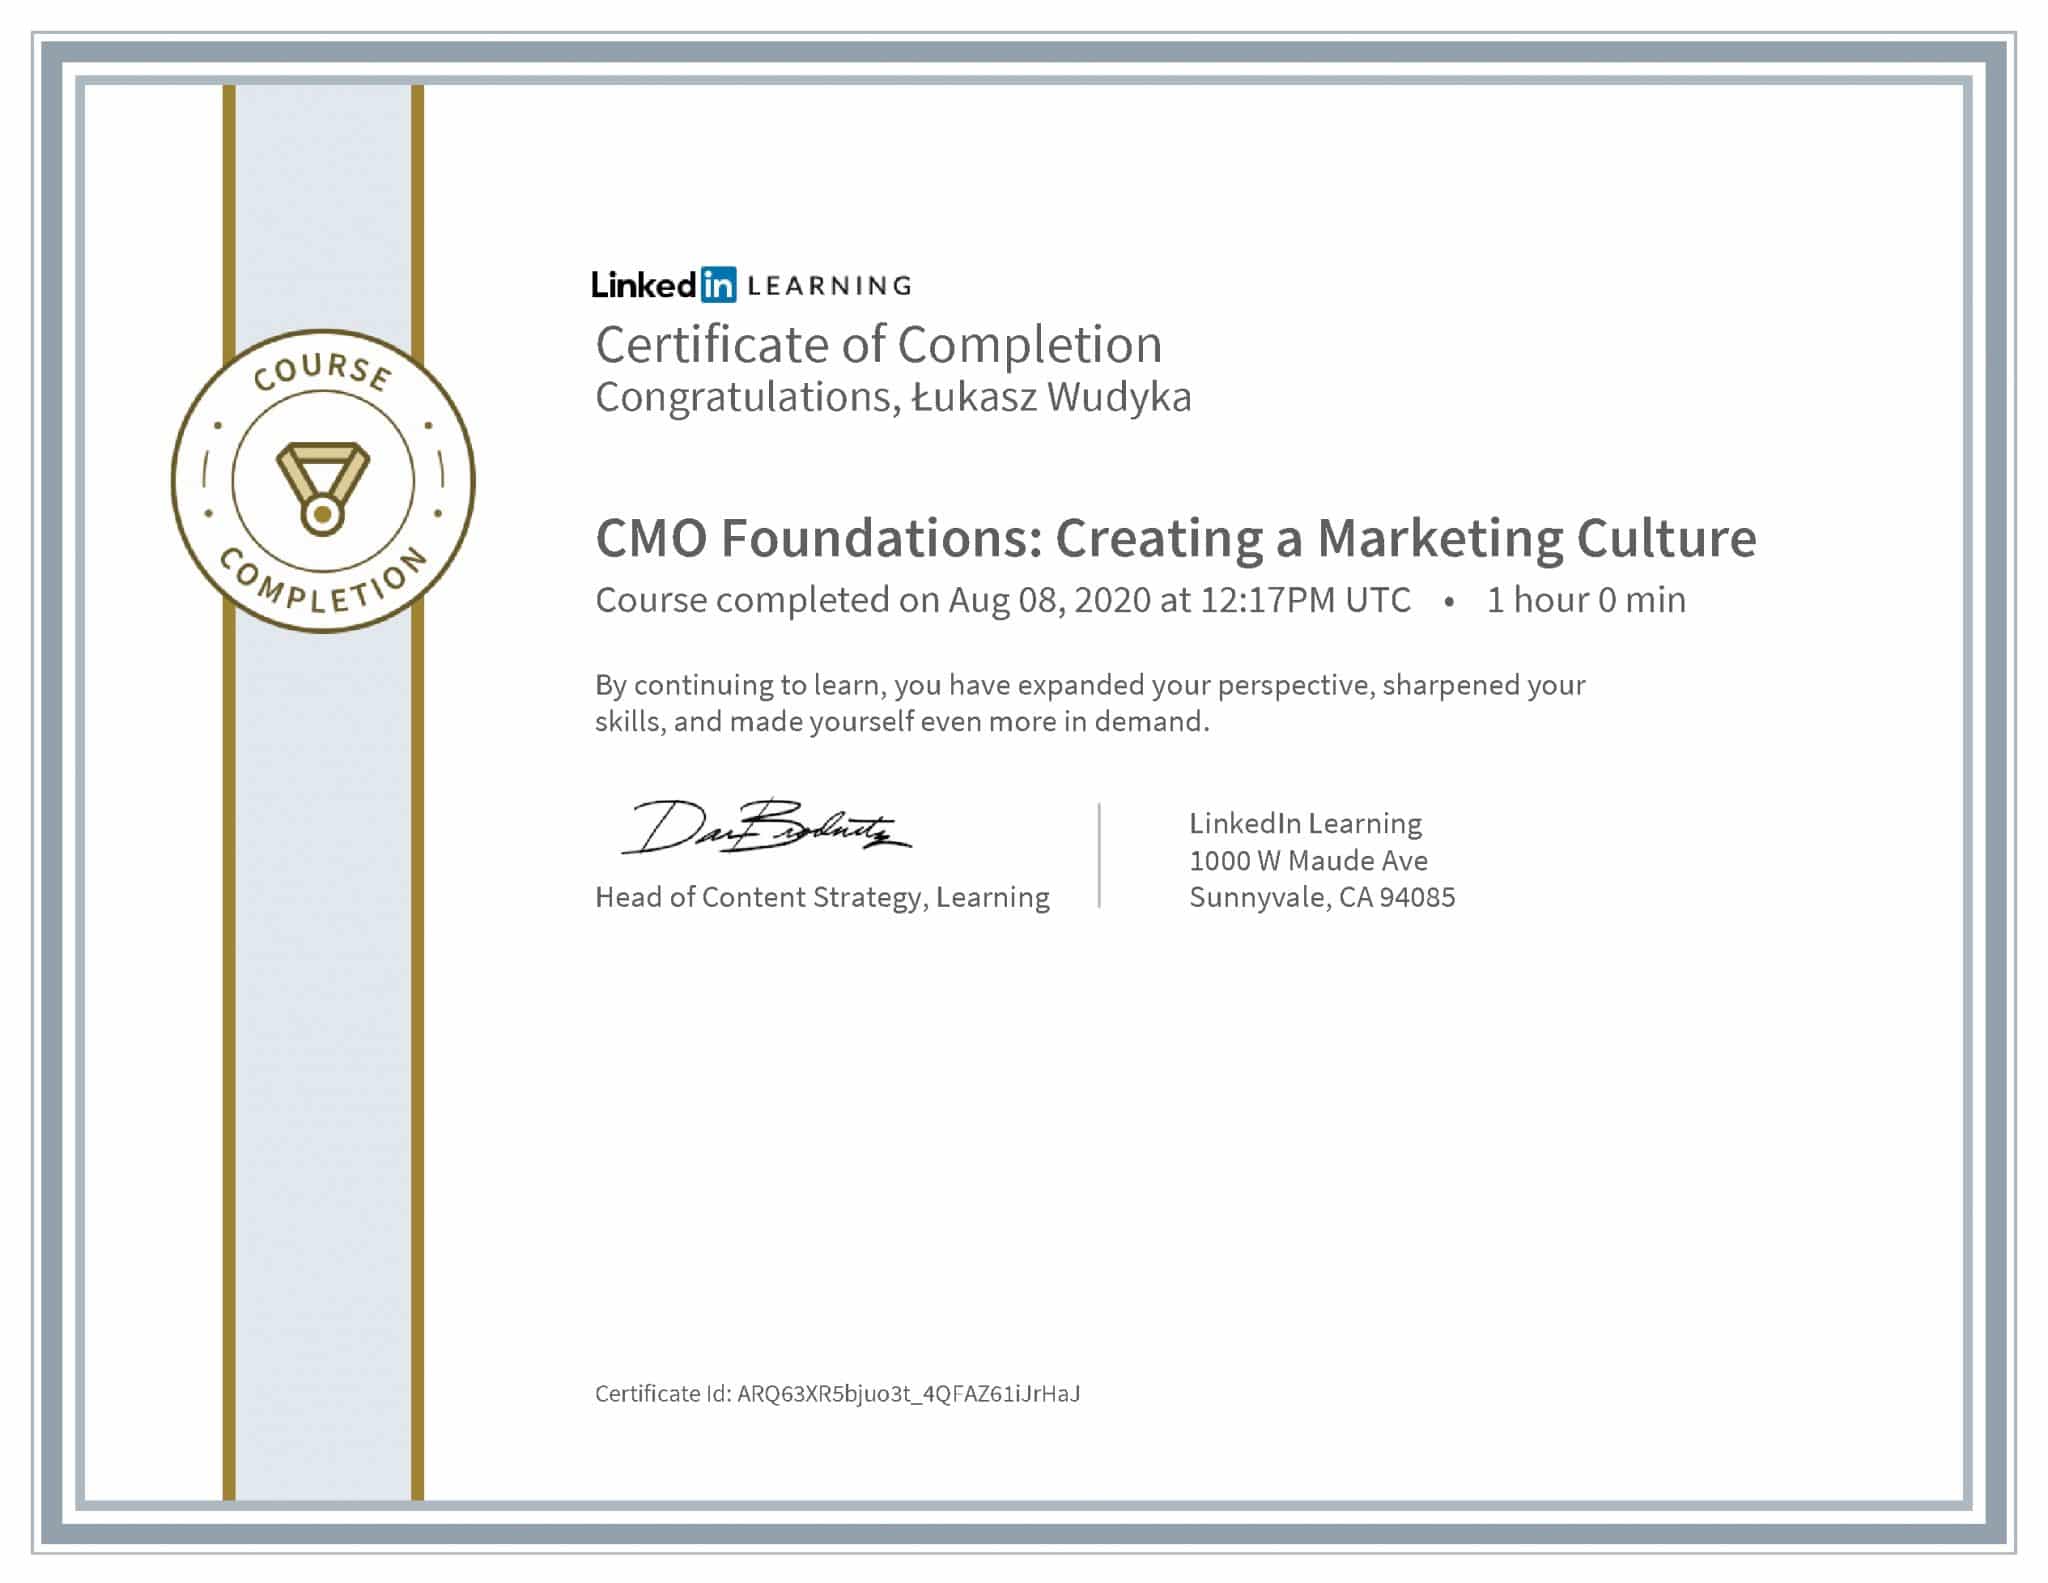 Łukasz Wudyka certyfikat LinkedIn CMO Foundations: Creating a Marketing Culture